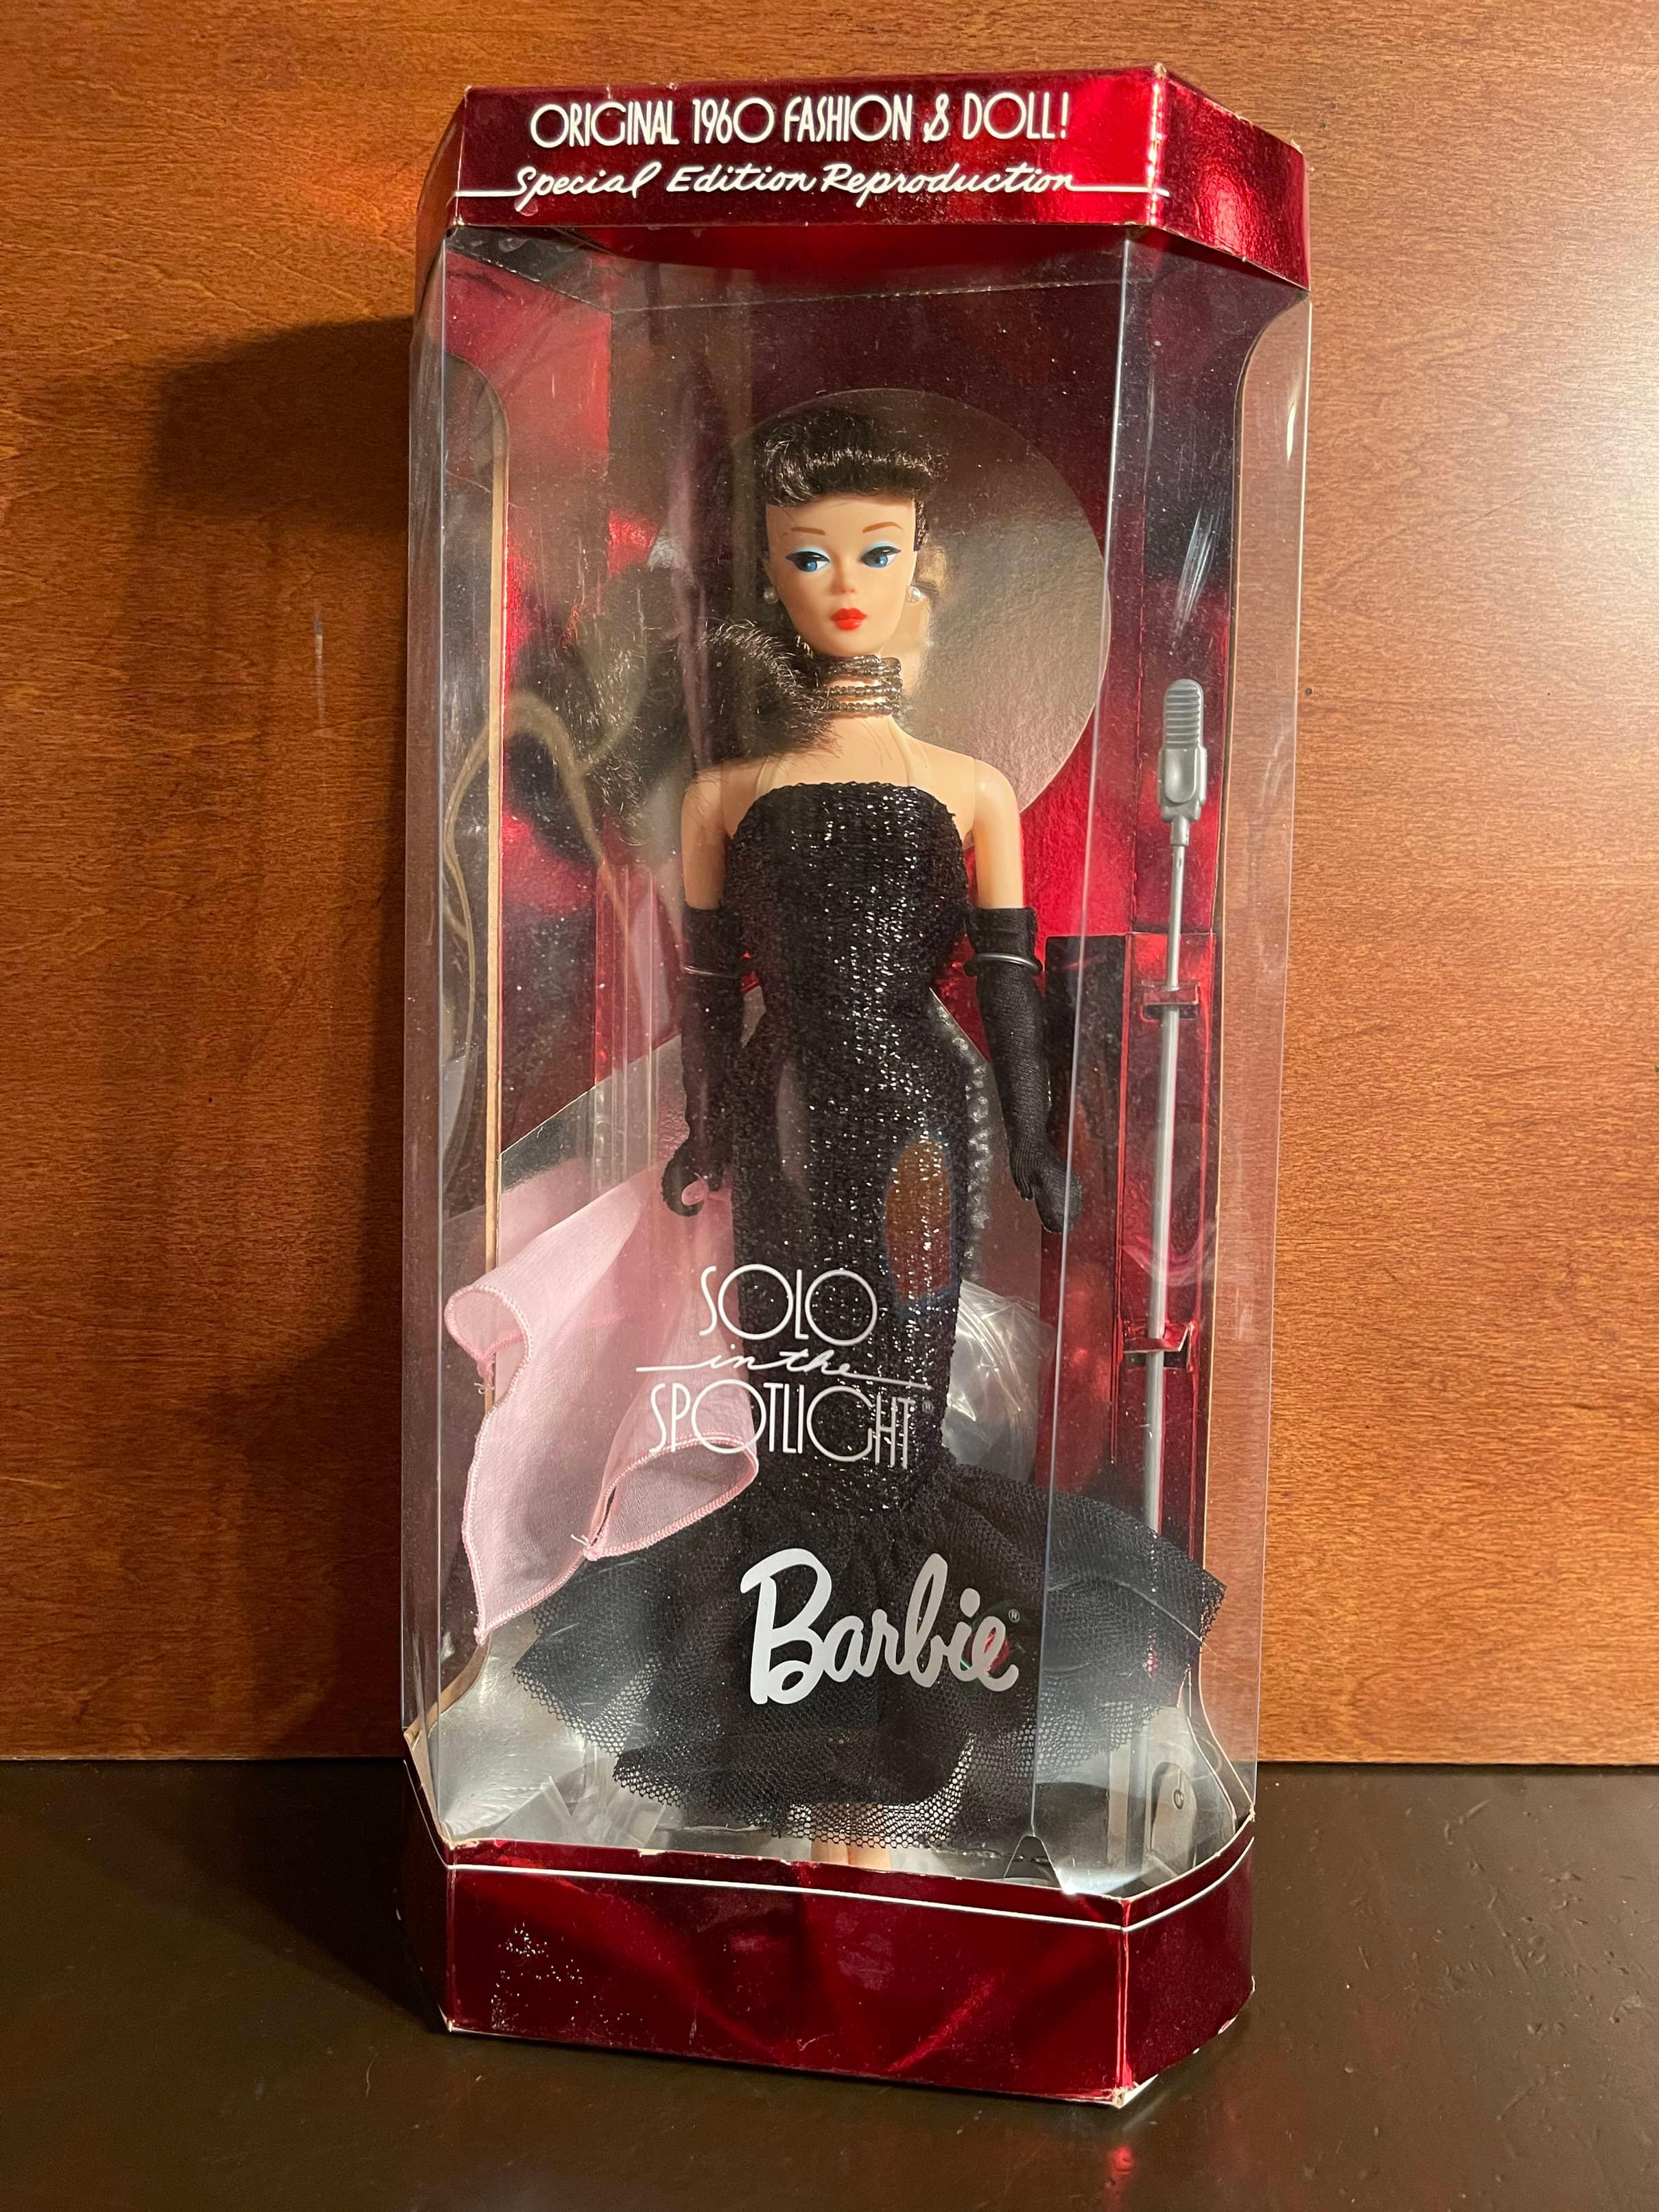 Barbie Solo in the Spotlight Original 1960 Fashion & Doll Special Edition Reproduction